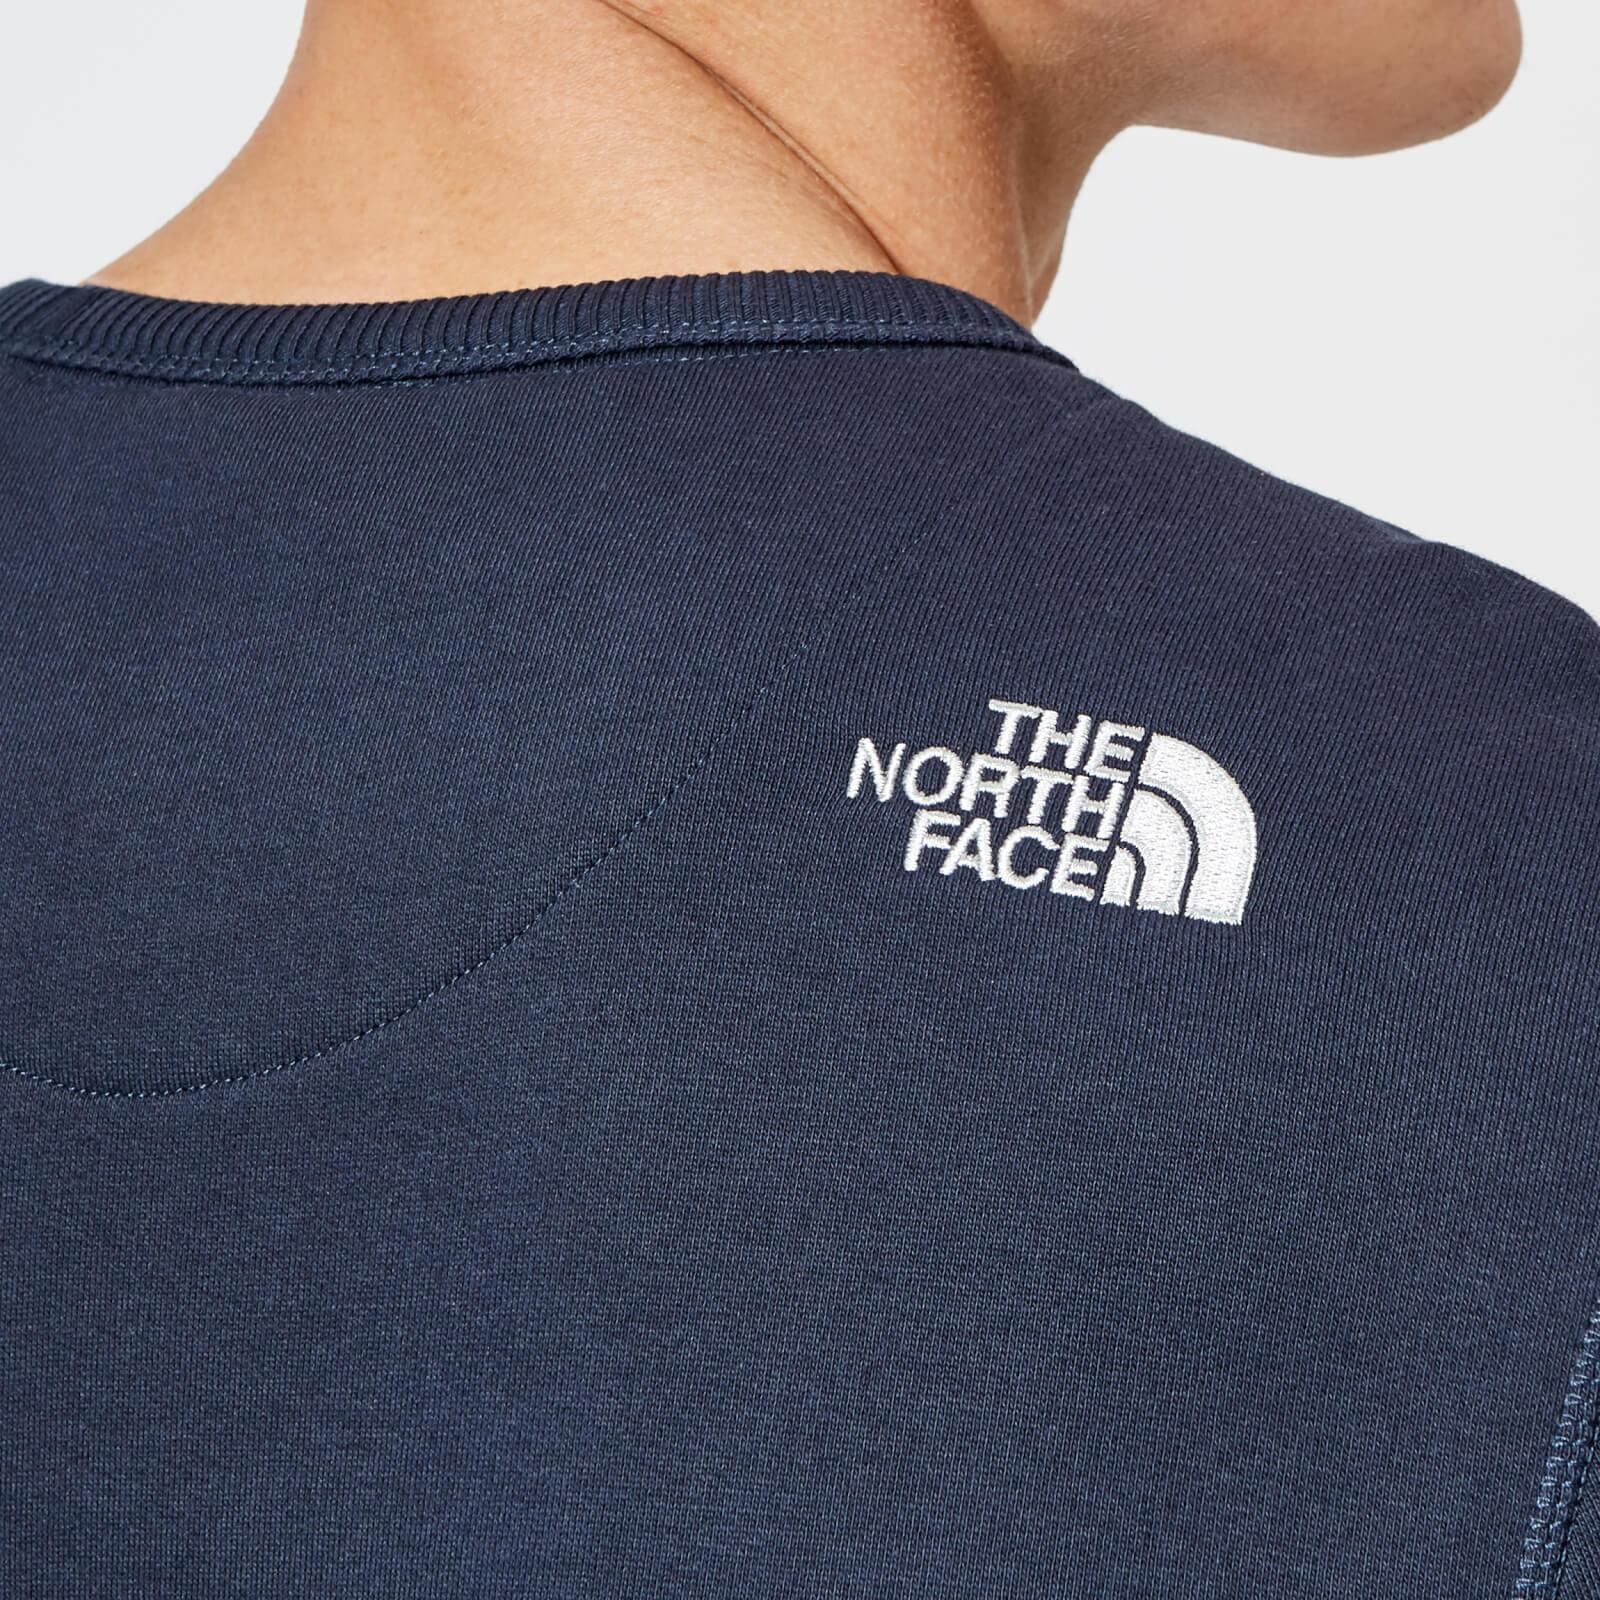 Lyst - The North Face Drew Peak Crew Neck Sweatshirt in Blue for Men